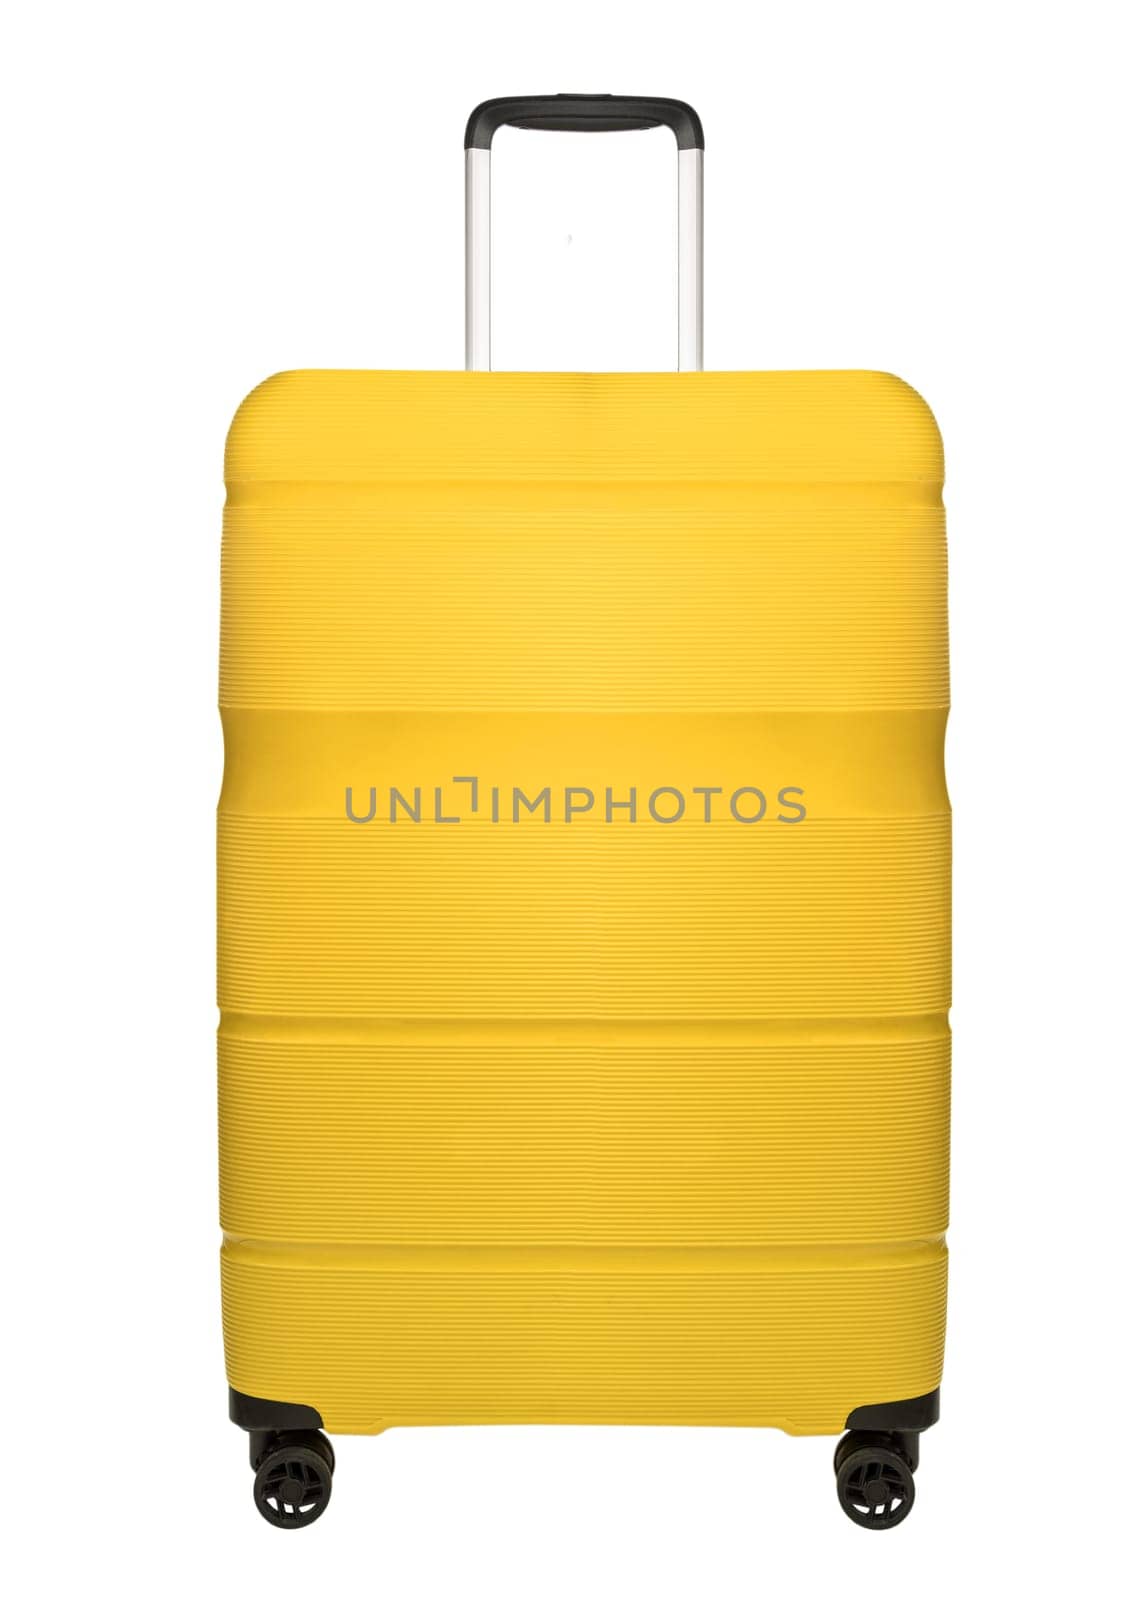 Travel yellow suitcase isolated on white background by dmitryz